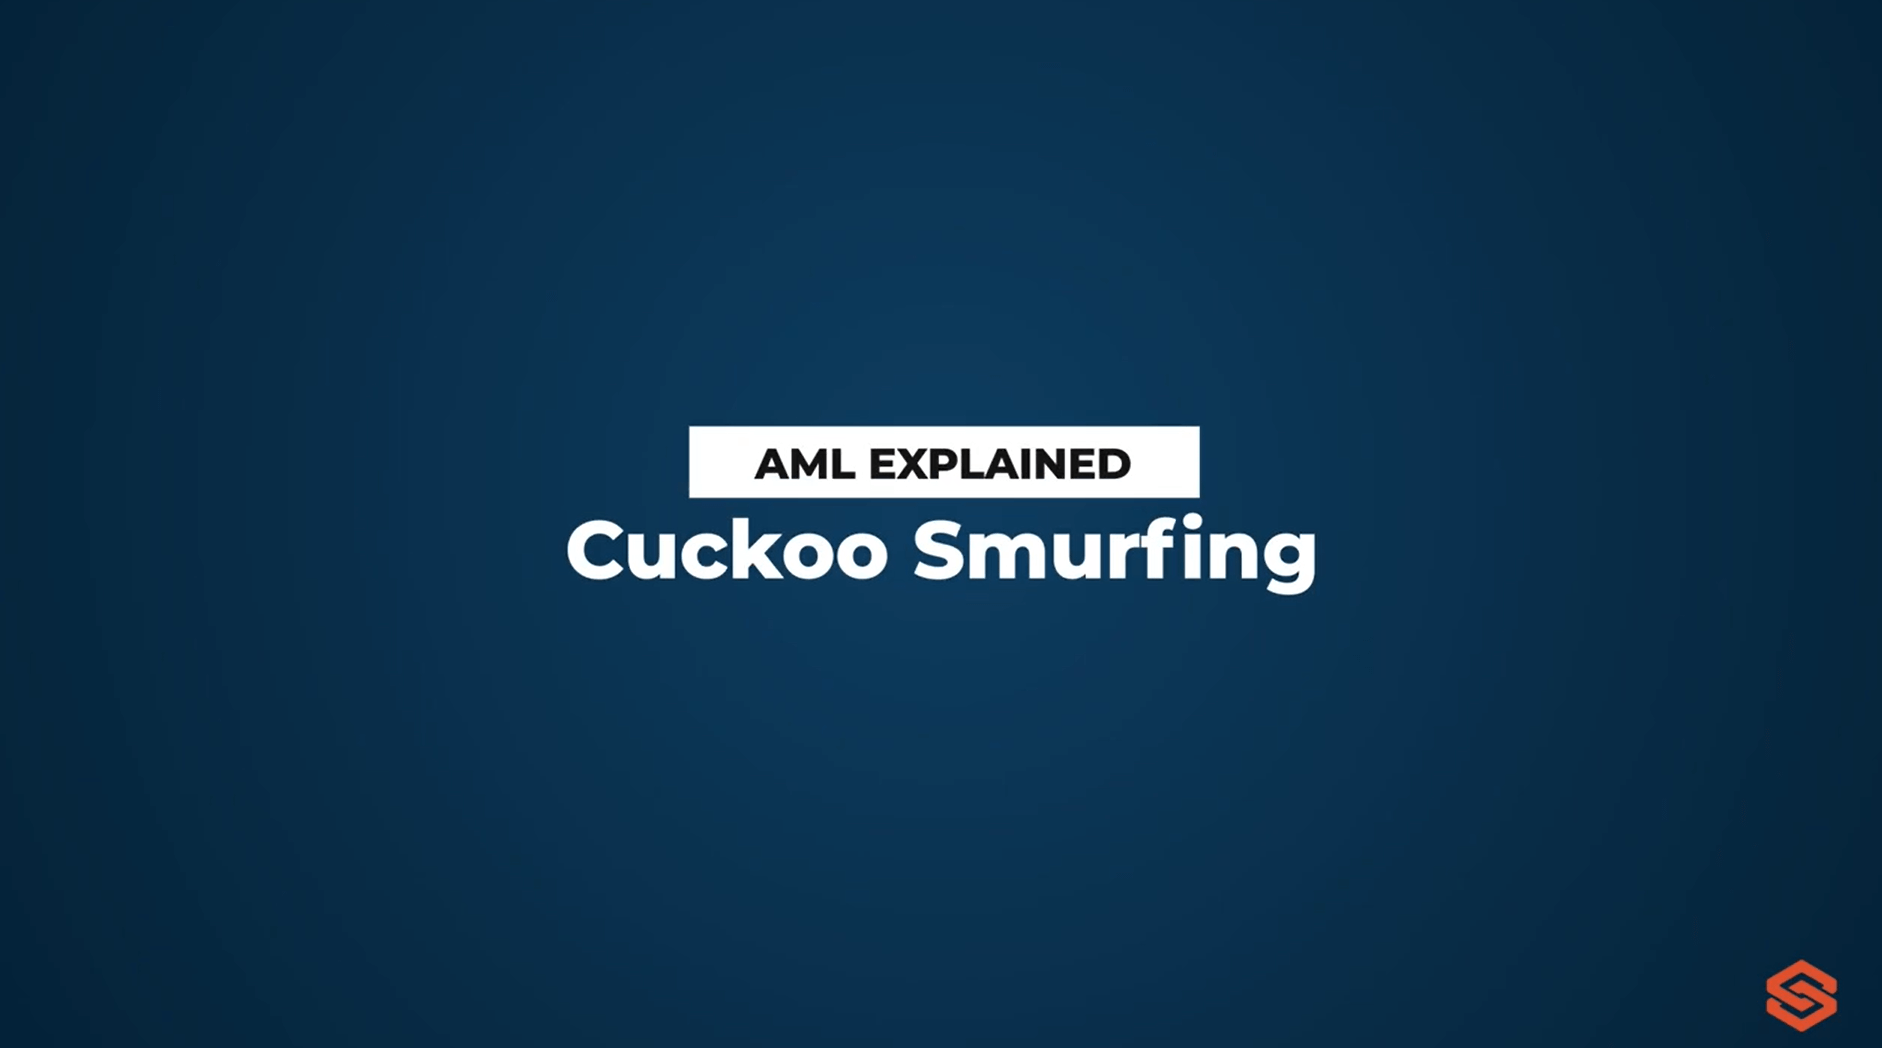  Cuckoo Smurfing